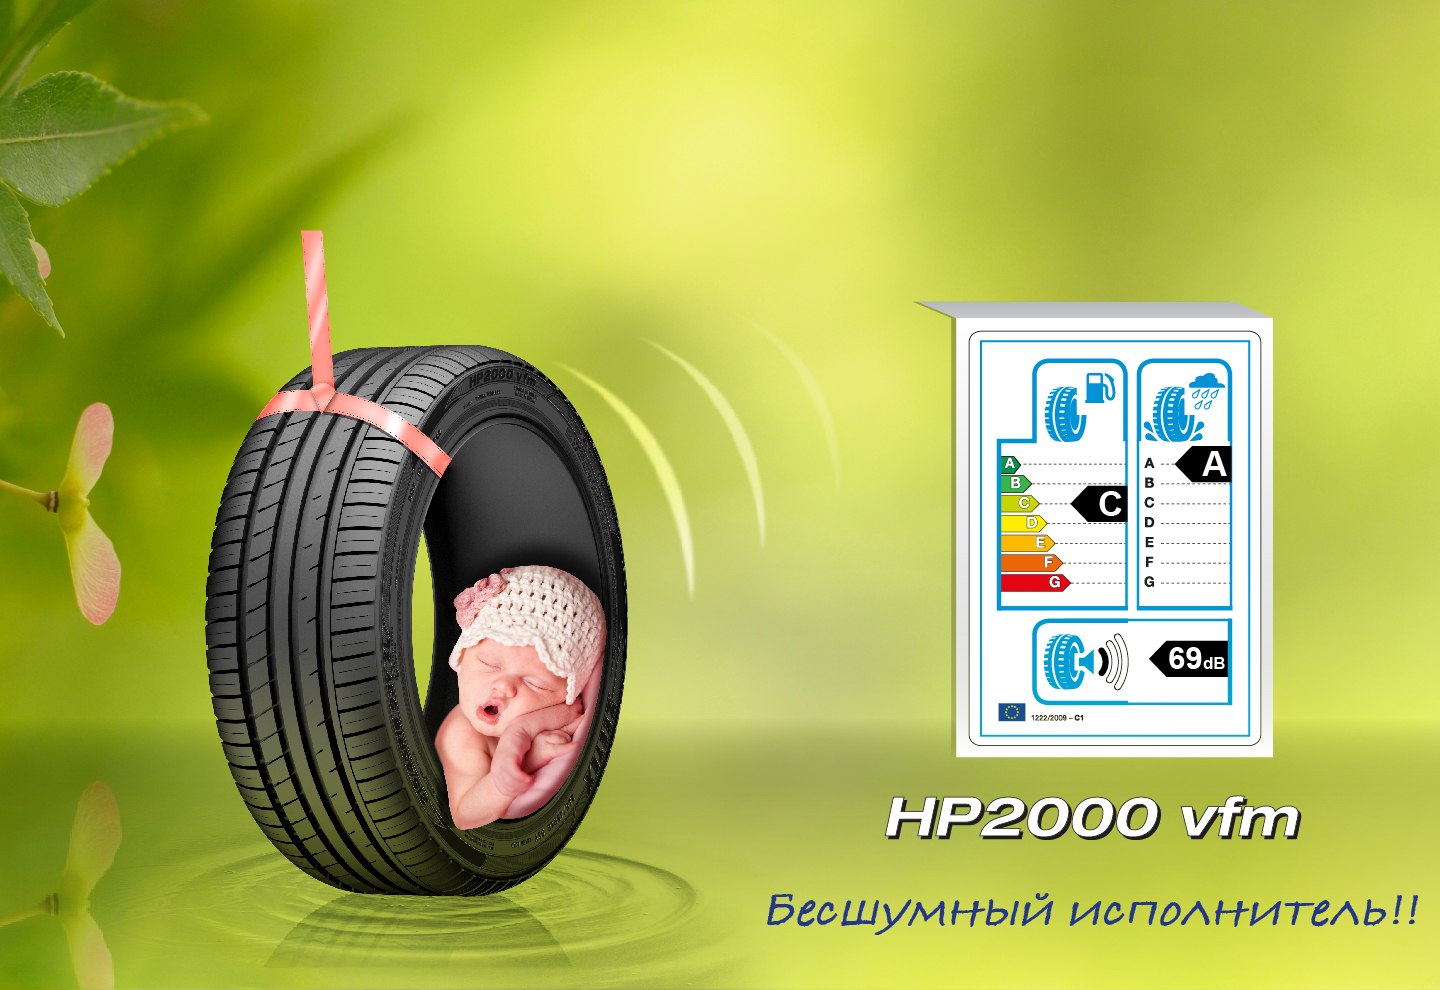 HP2000-vfm-Russian